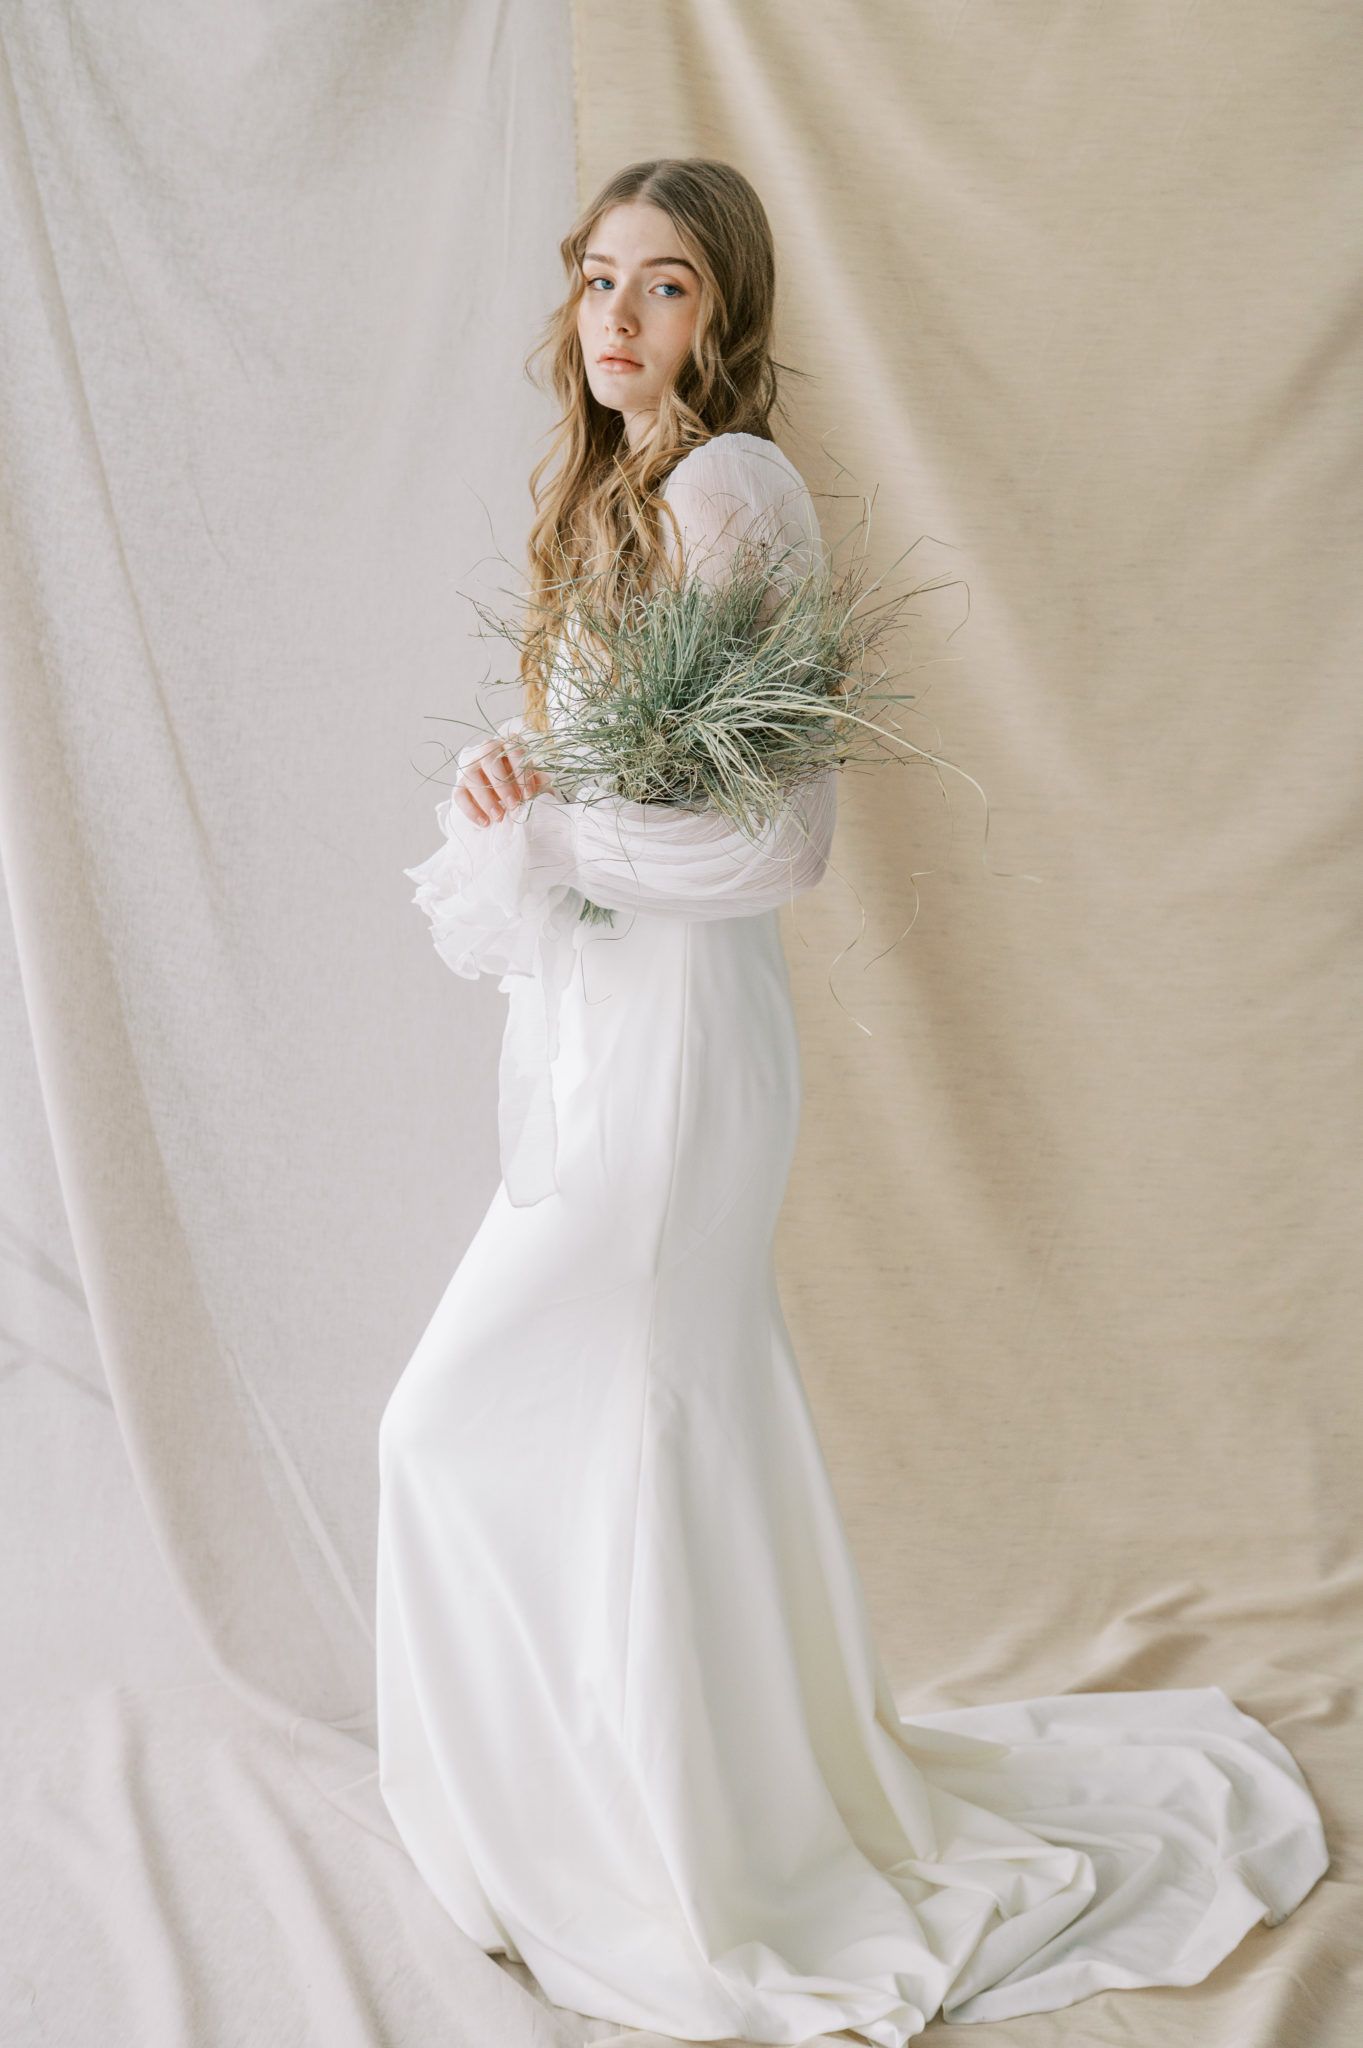 Neutral earth-tone backdrop for bridal studio-session, unique bouquet inspiration using dried grasses for the bohemian bride